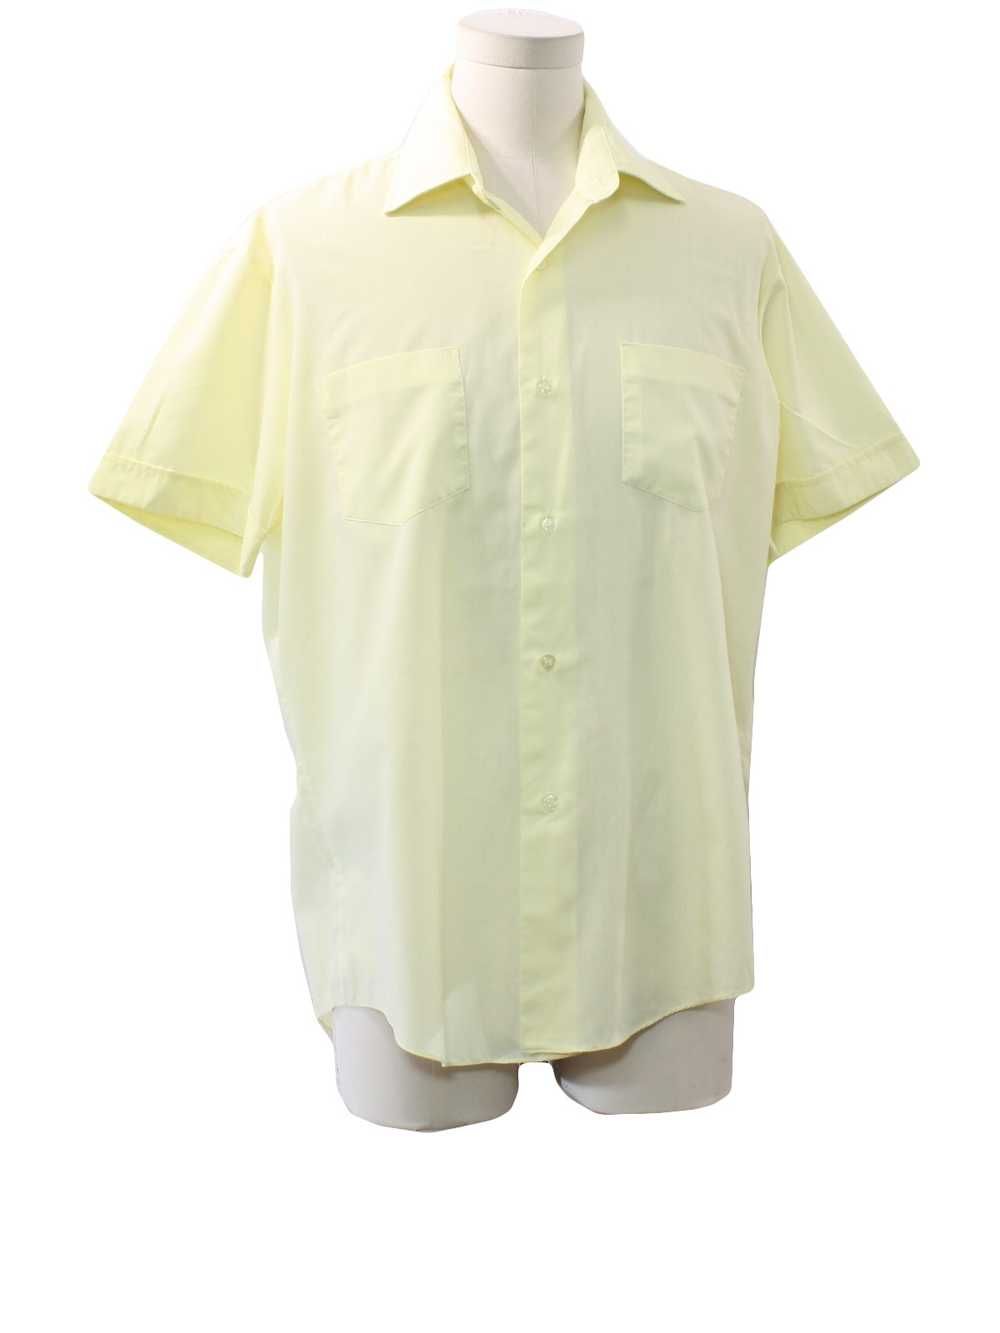 1960's Montgomery Ward Mens Mod Shirt - image 1